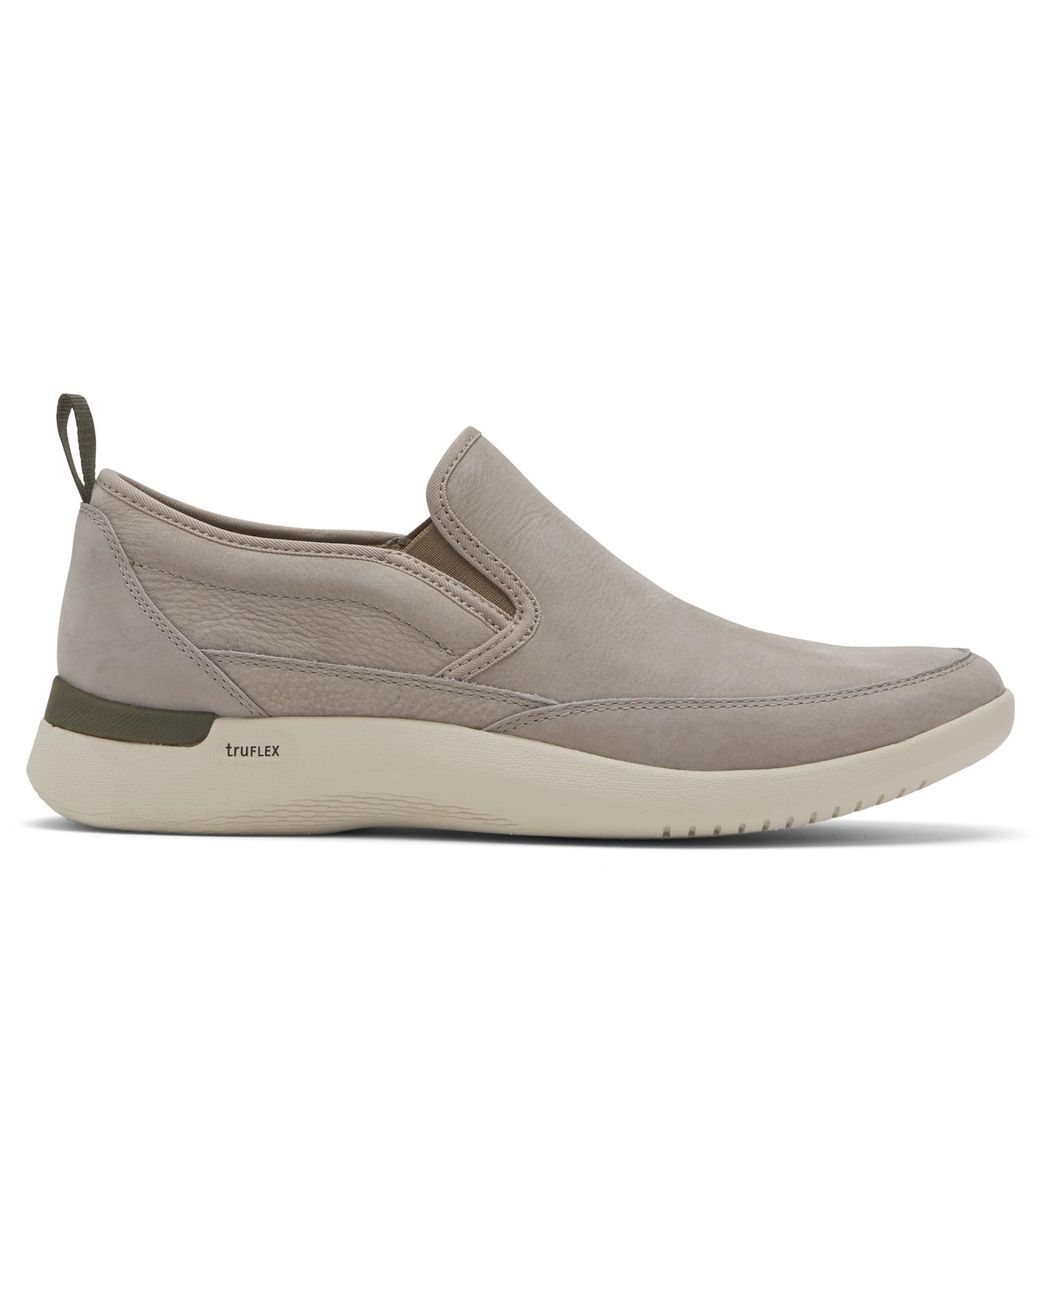 Rockport Mens Truflex Fly Slip-on - Size 7.5 M - Most Comfortable Shoe ...